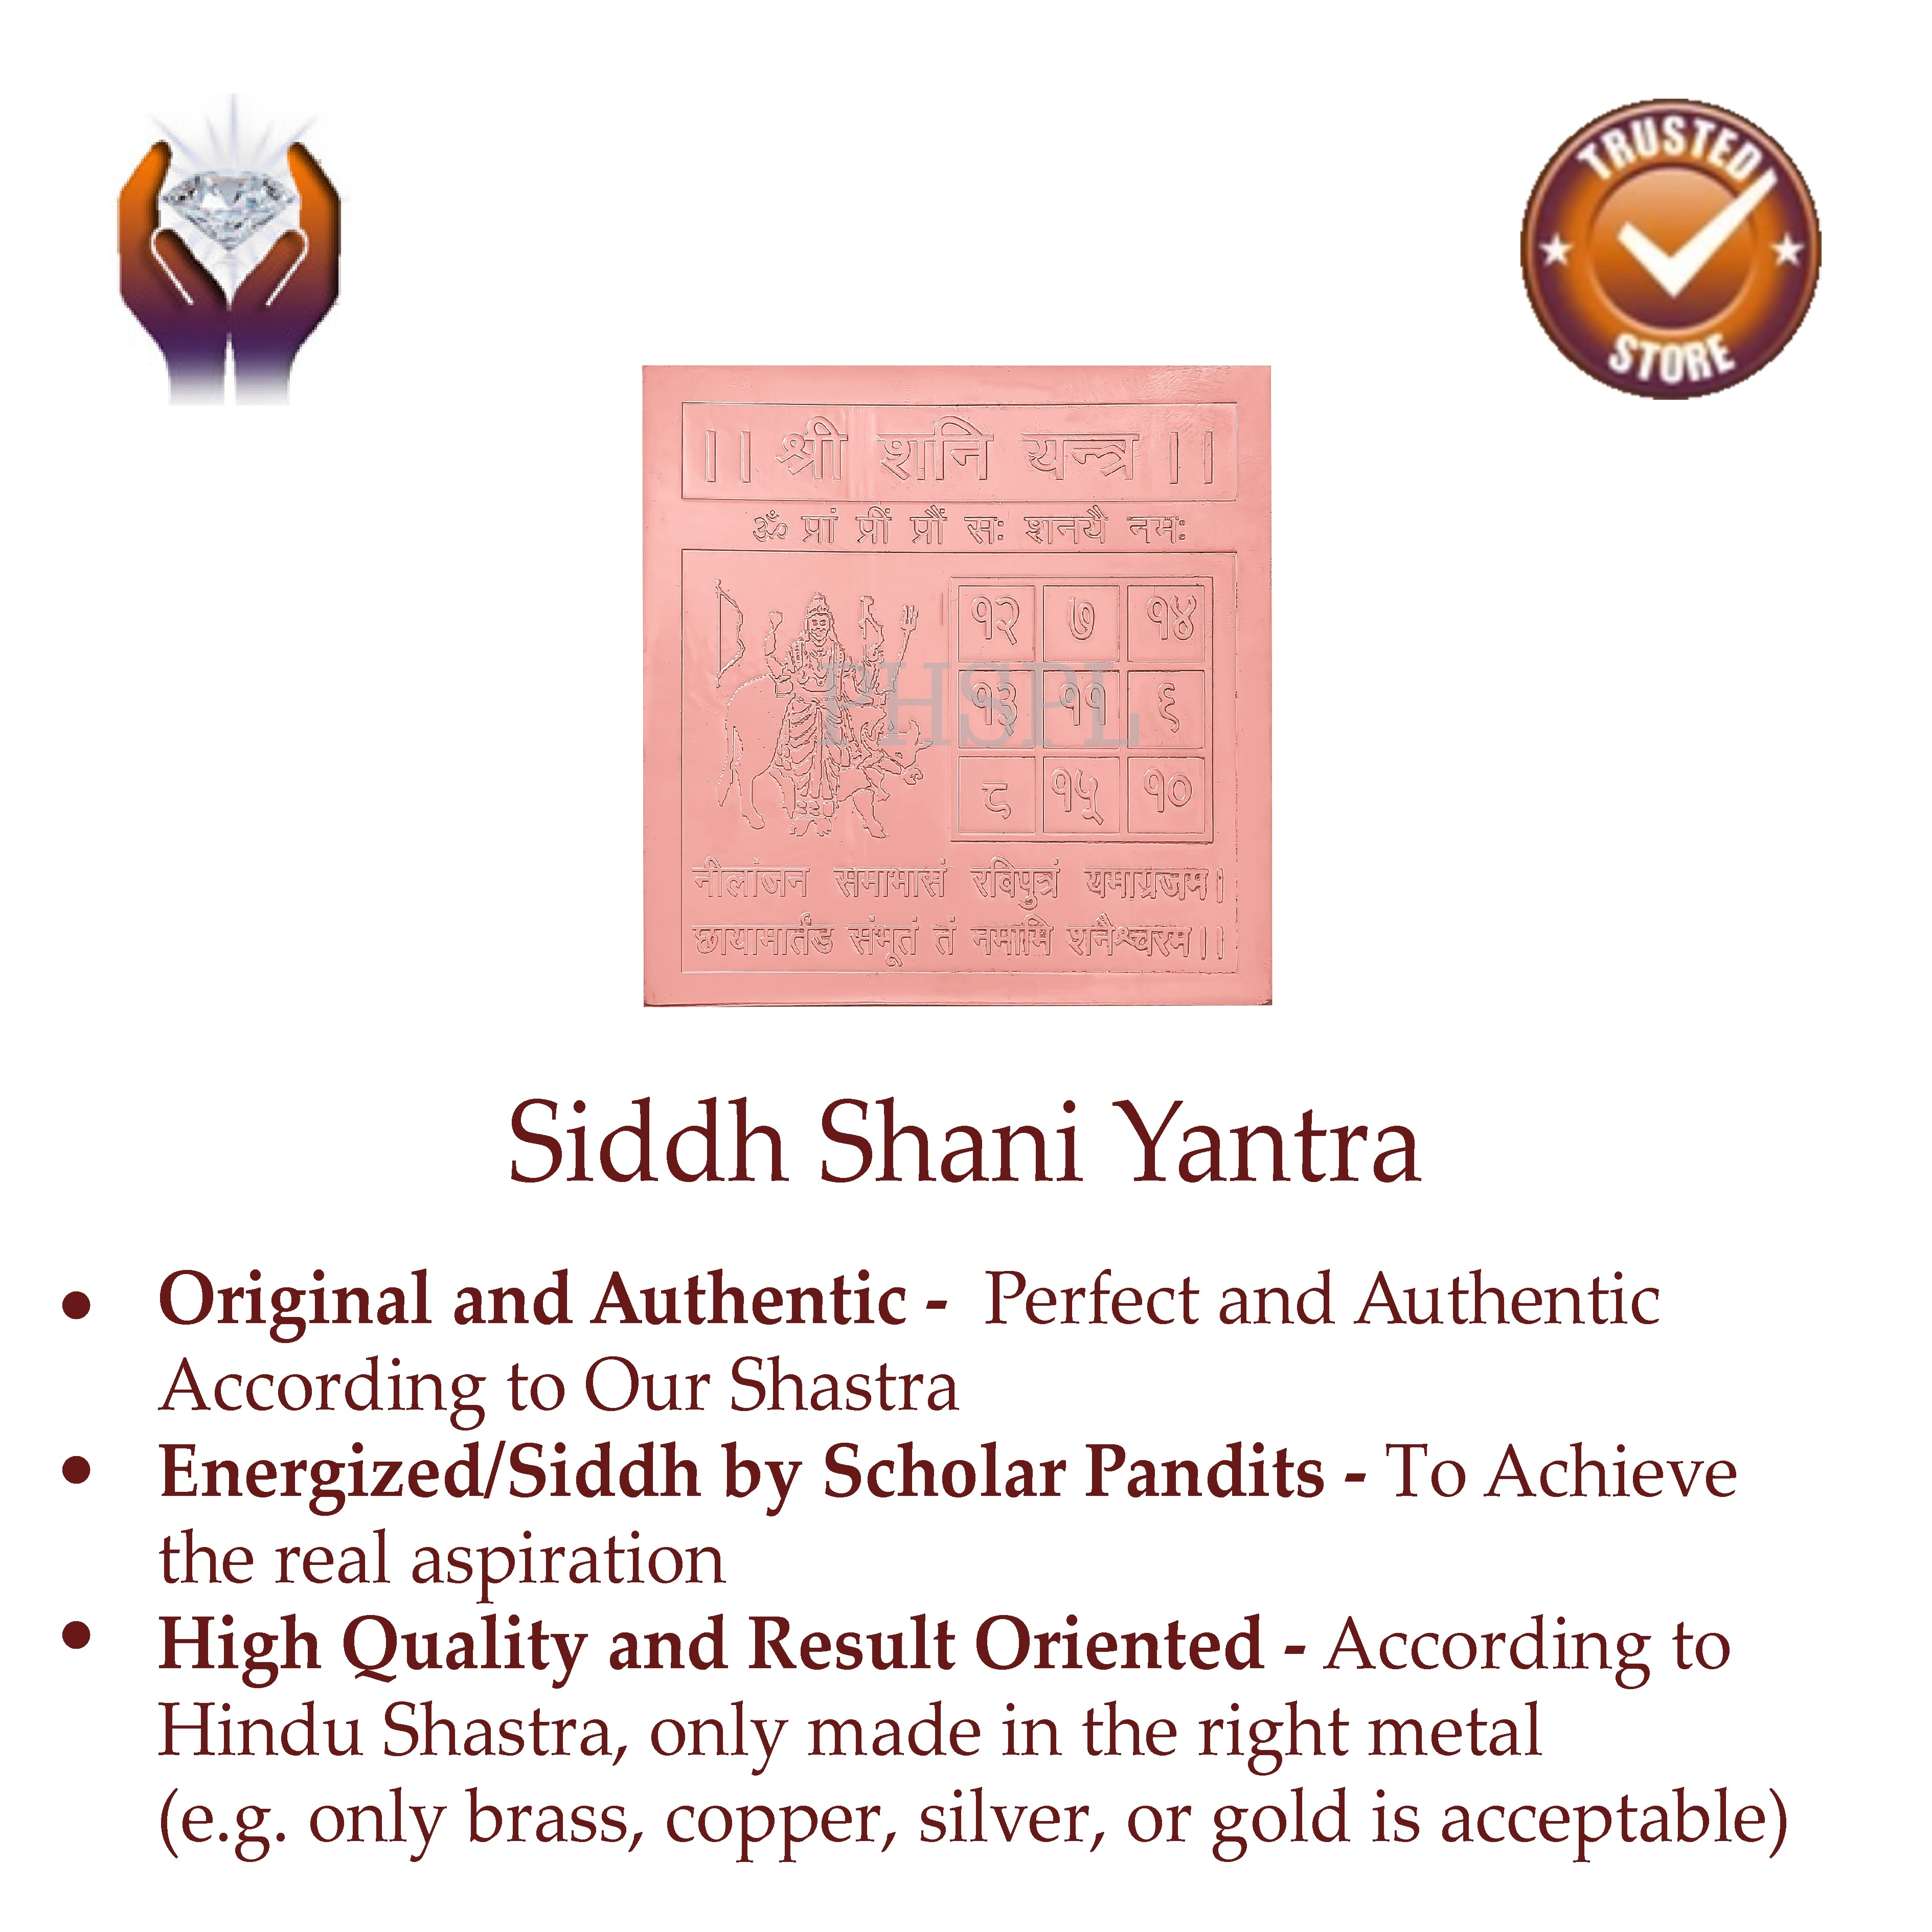 Shani Yantra Benefits